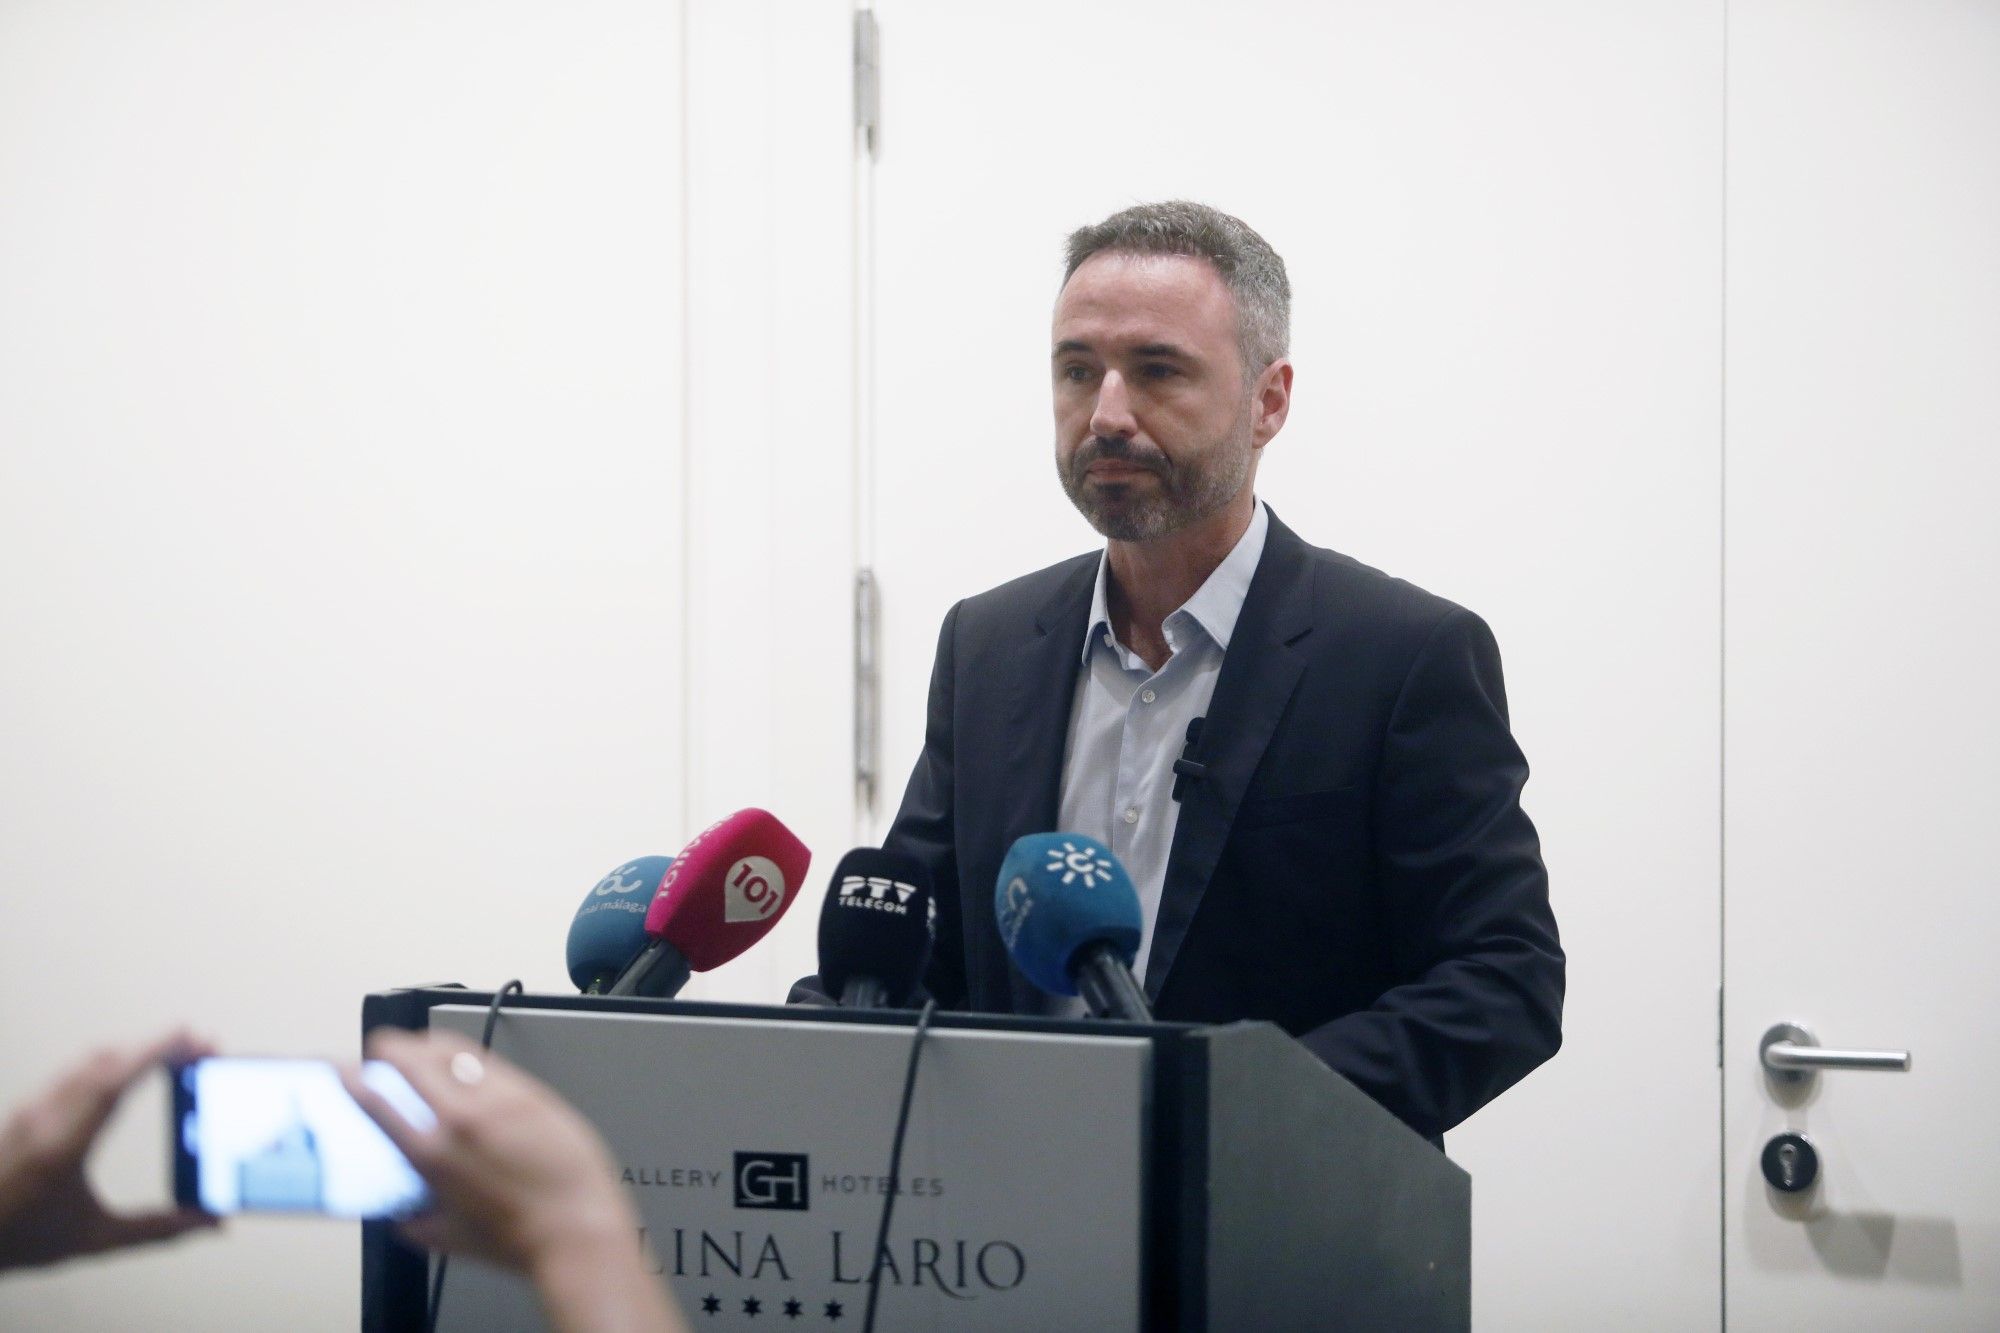 Guillermo Díaz anuncia que abandona la política